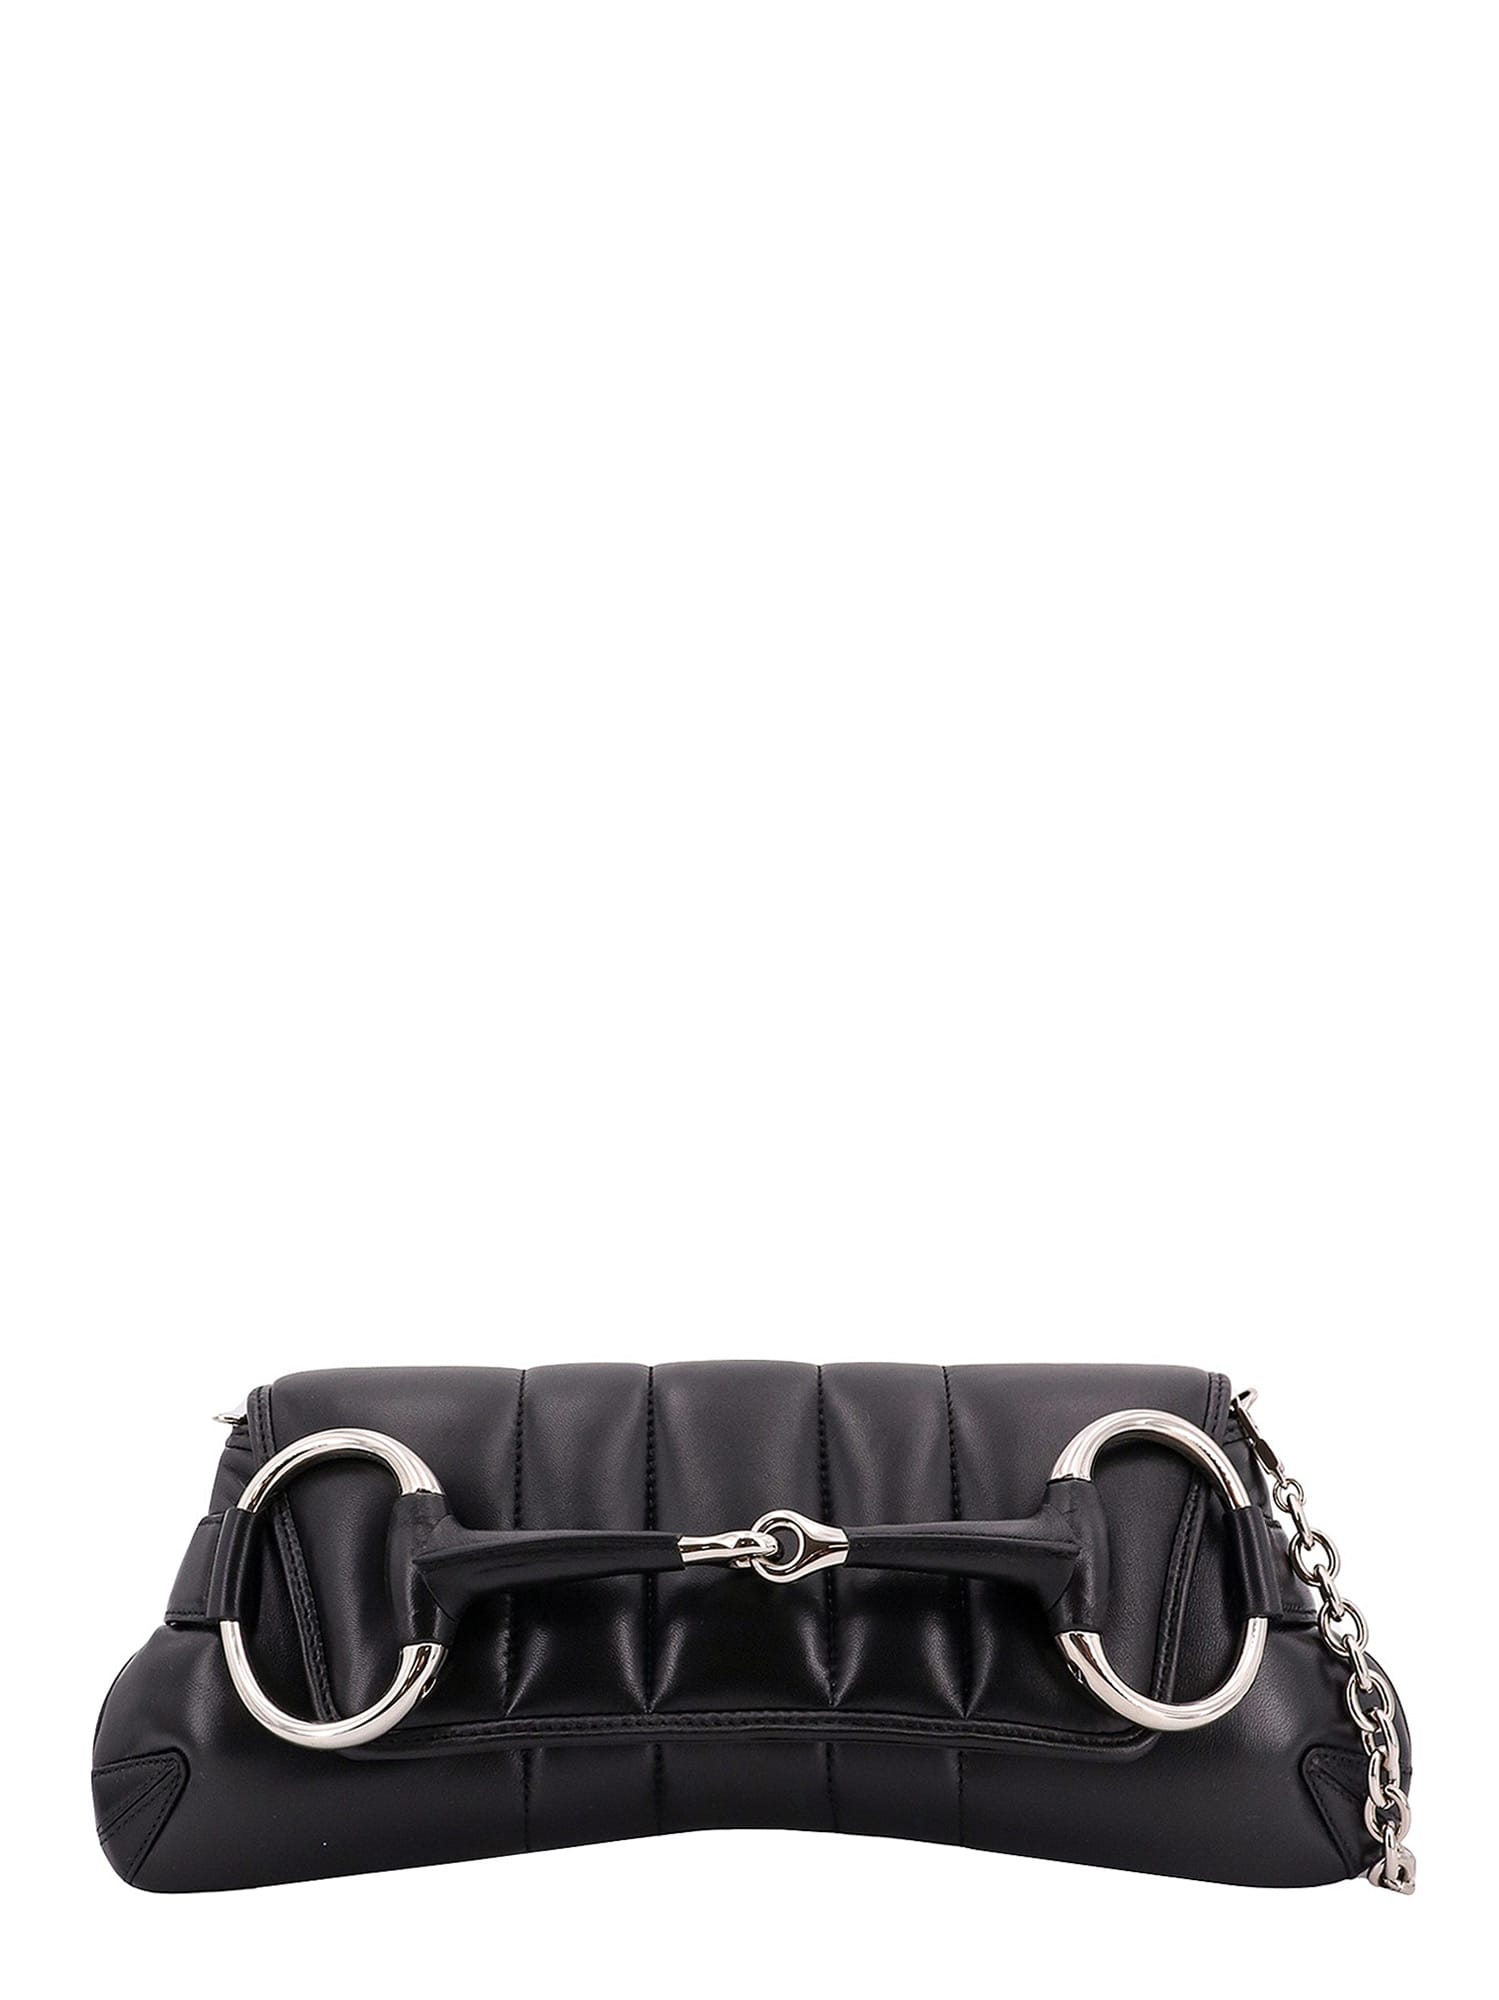 Gucci Horsebit Chain Shoulder Bag In Black